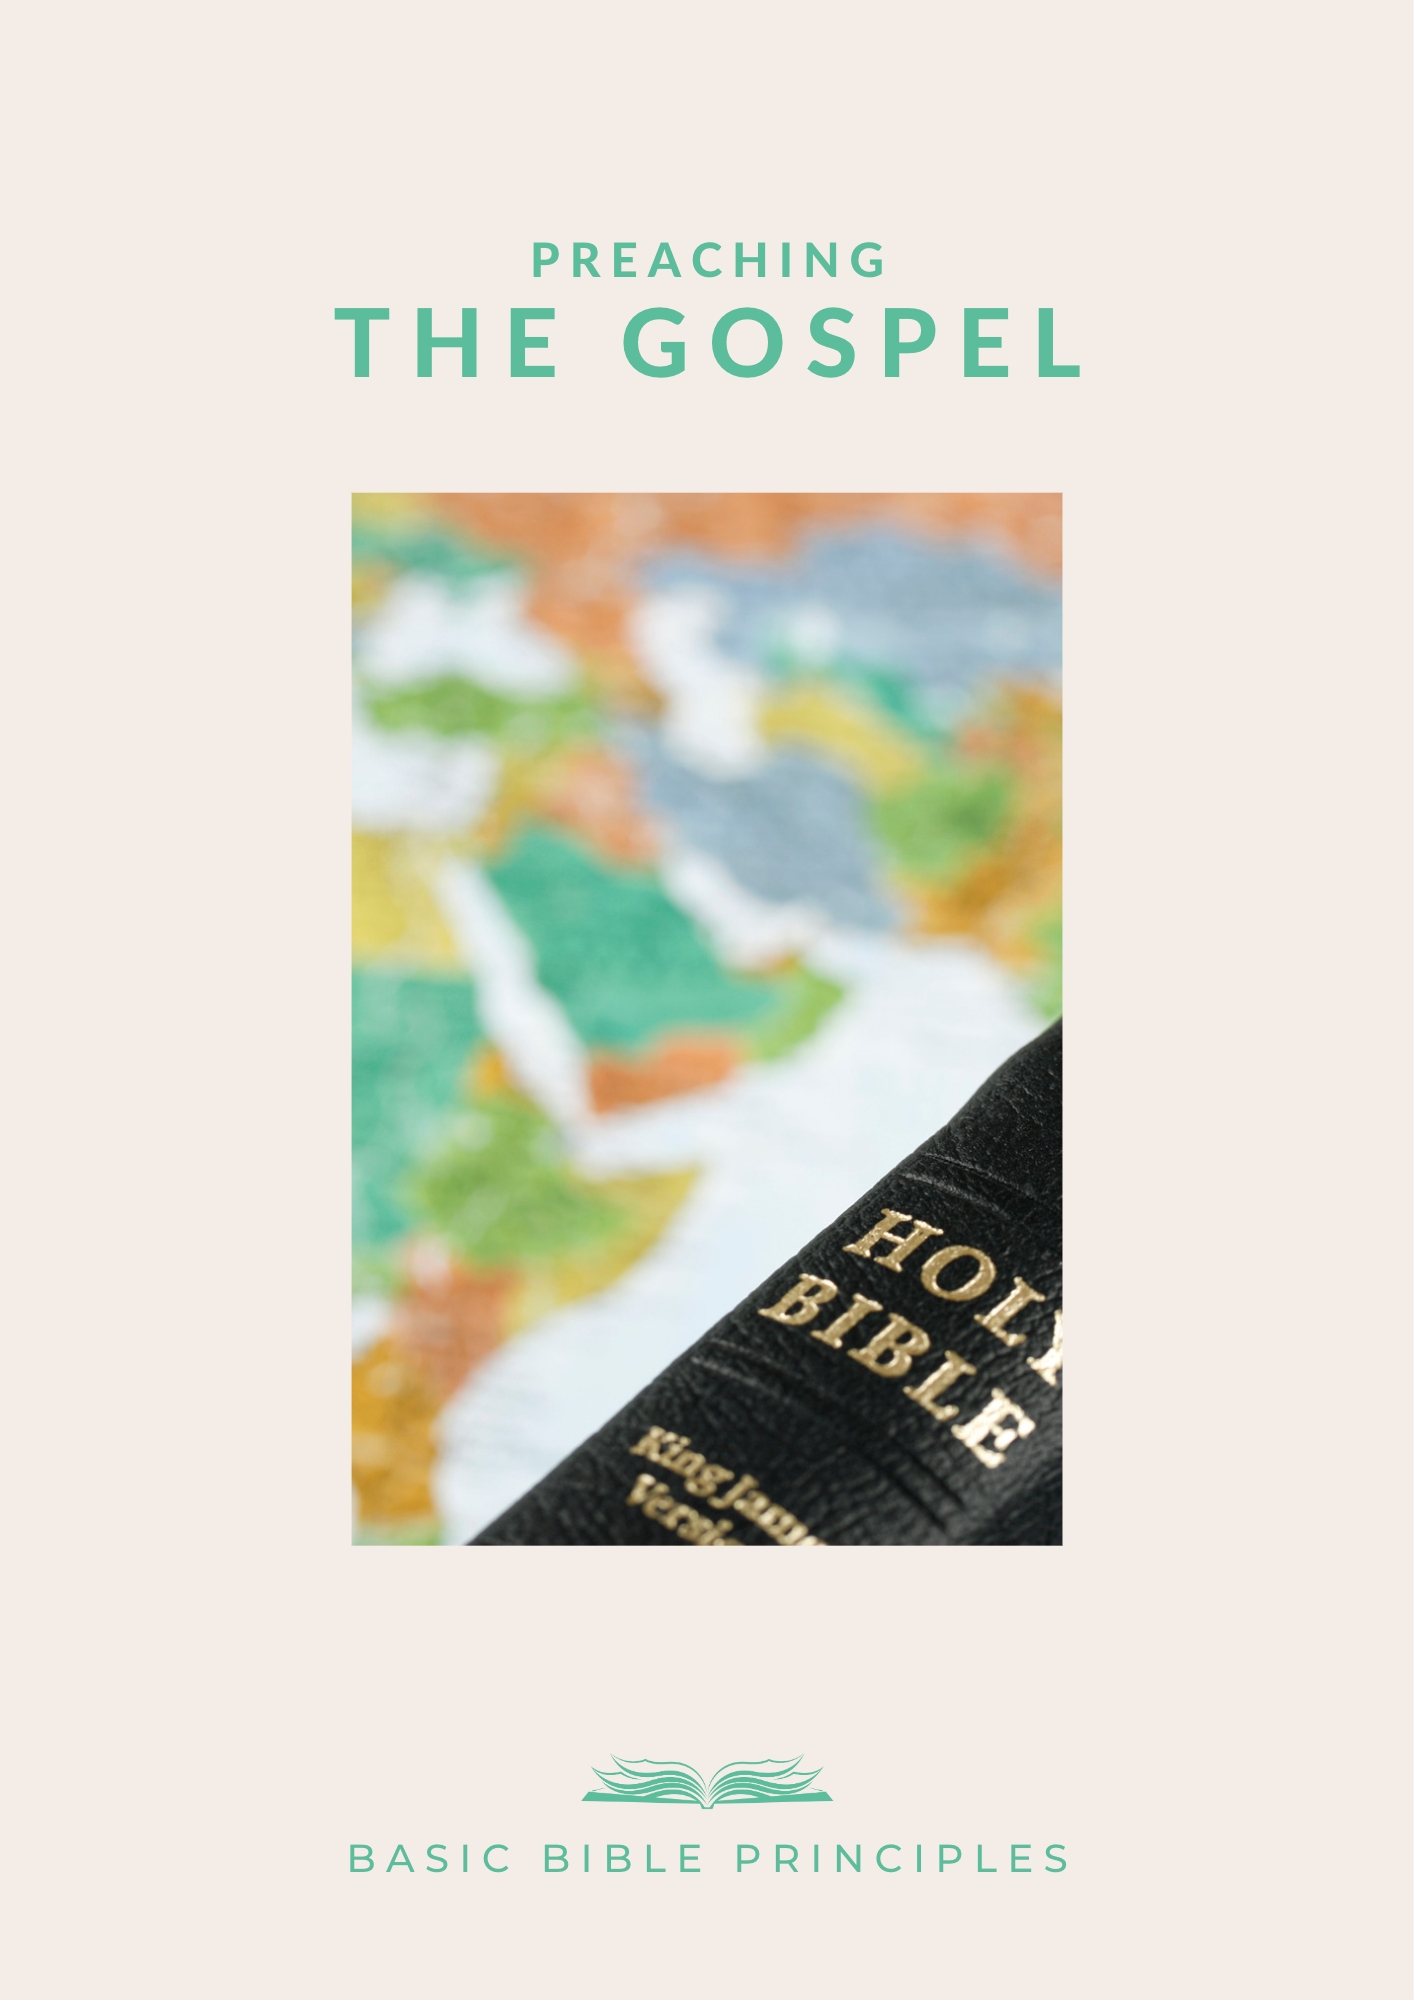 Basic Bible Principles: PREACHING THE GOSPEL